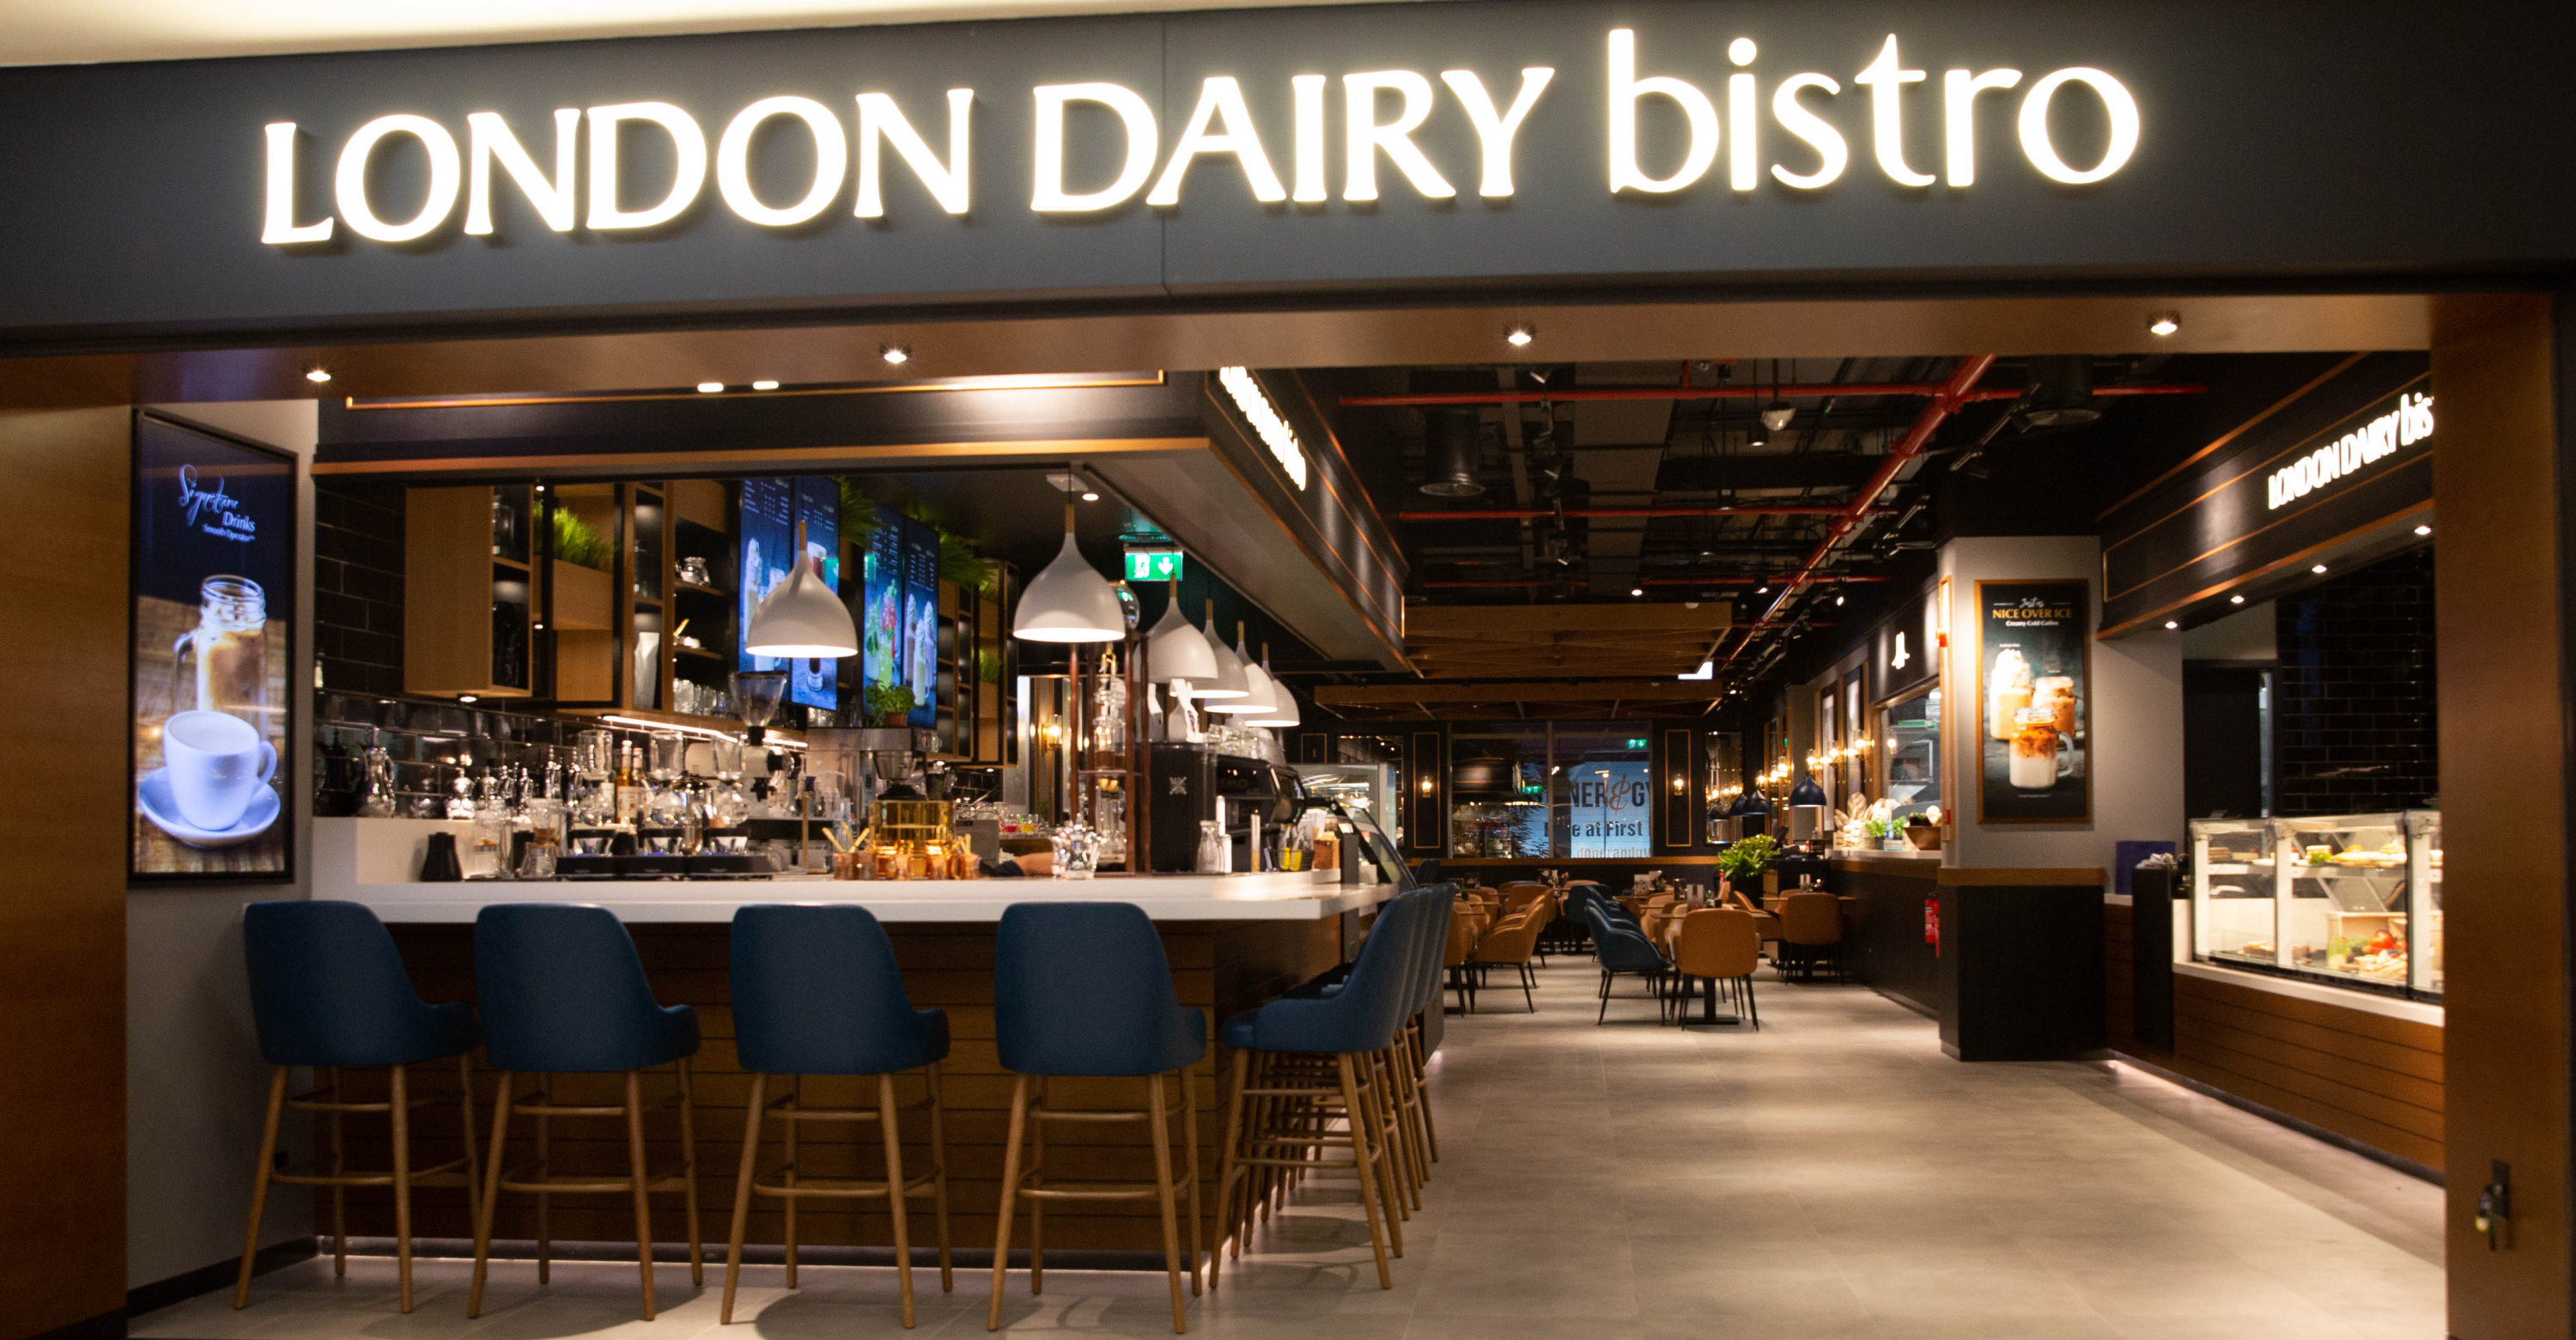 London Dairy Bistro opens in Dubai Media City - Cafes, Restaurants